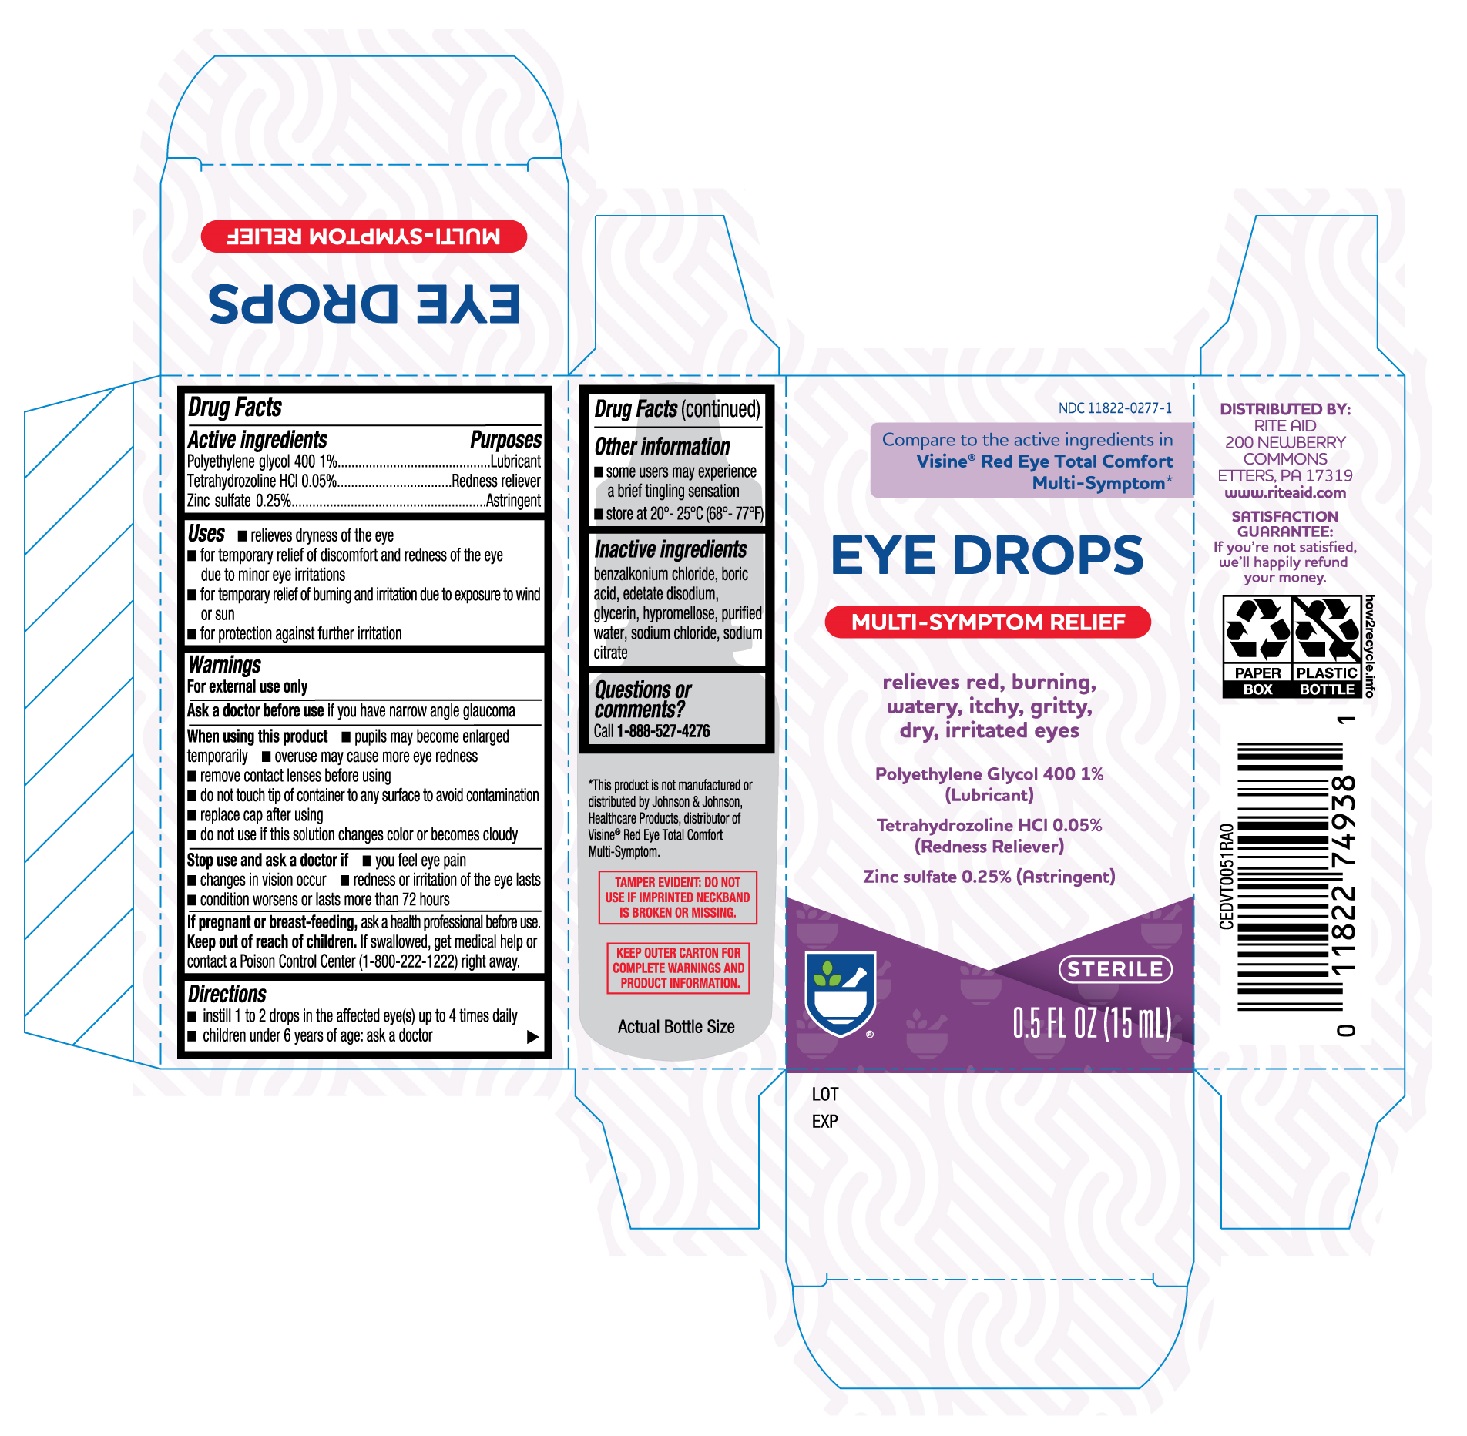 Rite Aid Multi-Symptom Relief Eye Drops